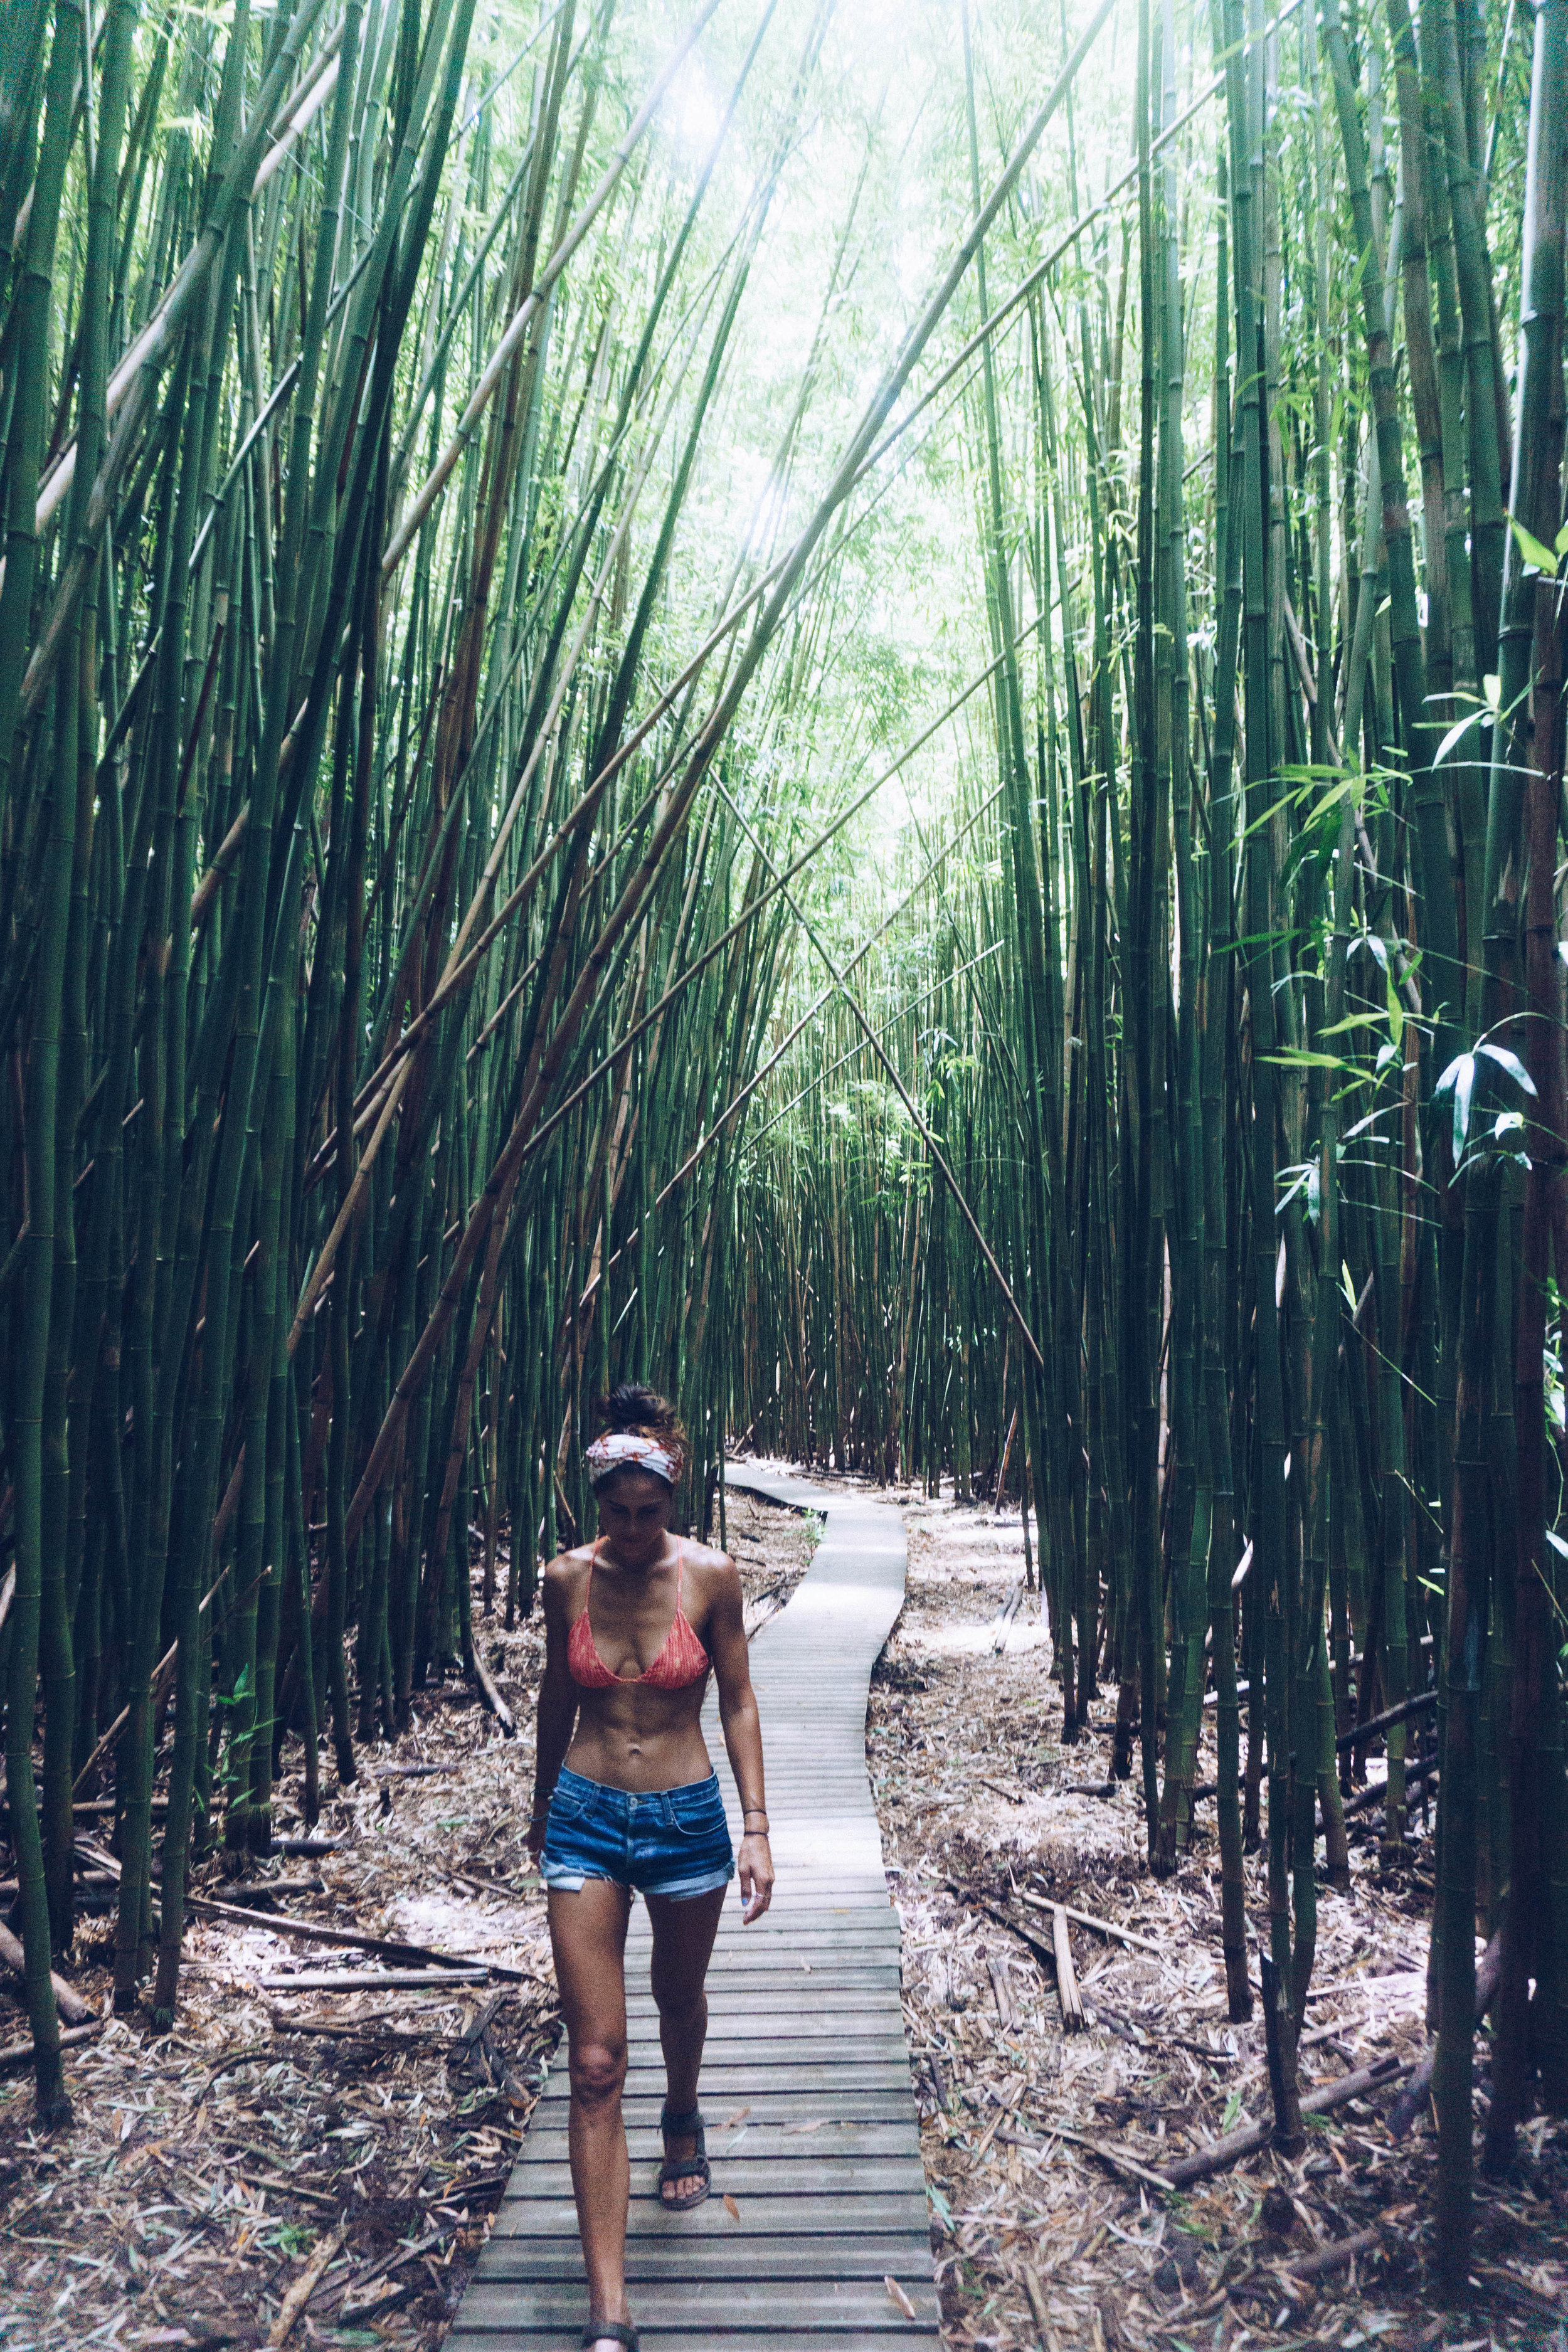  The  PIPIWAI TRAIL  through the bamboo bushes to  WAIMOKU FALLS.&nbsp;  